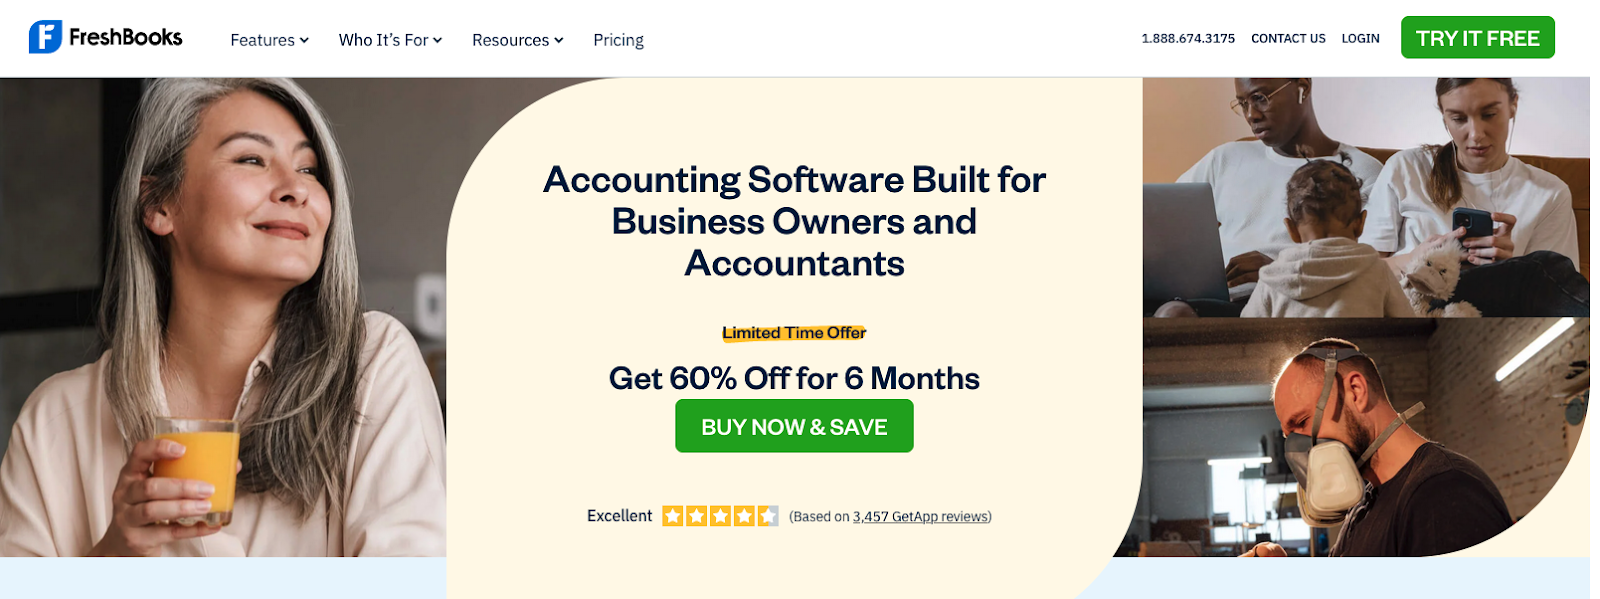 Freshbooks SaaS accounting software homepage